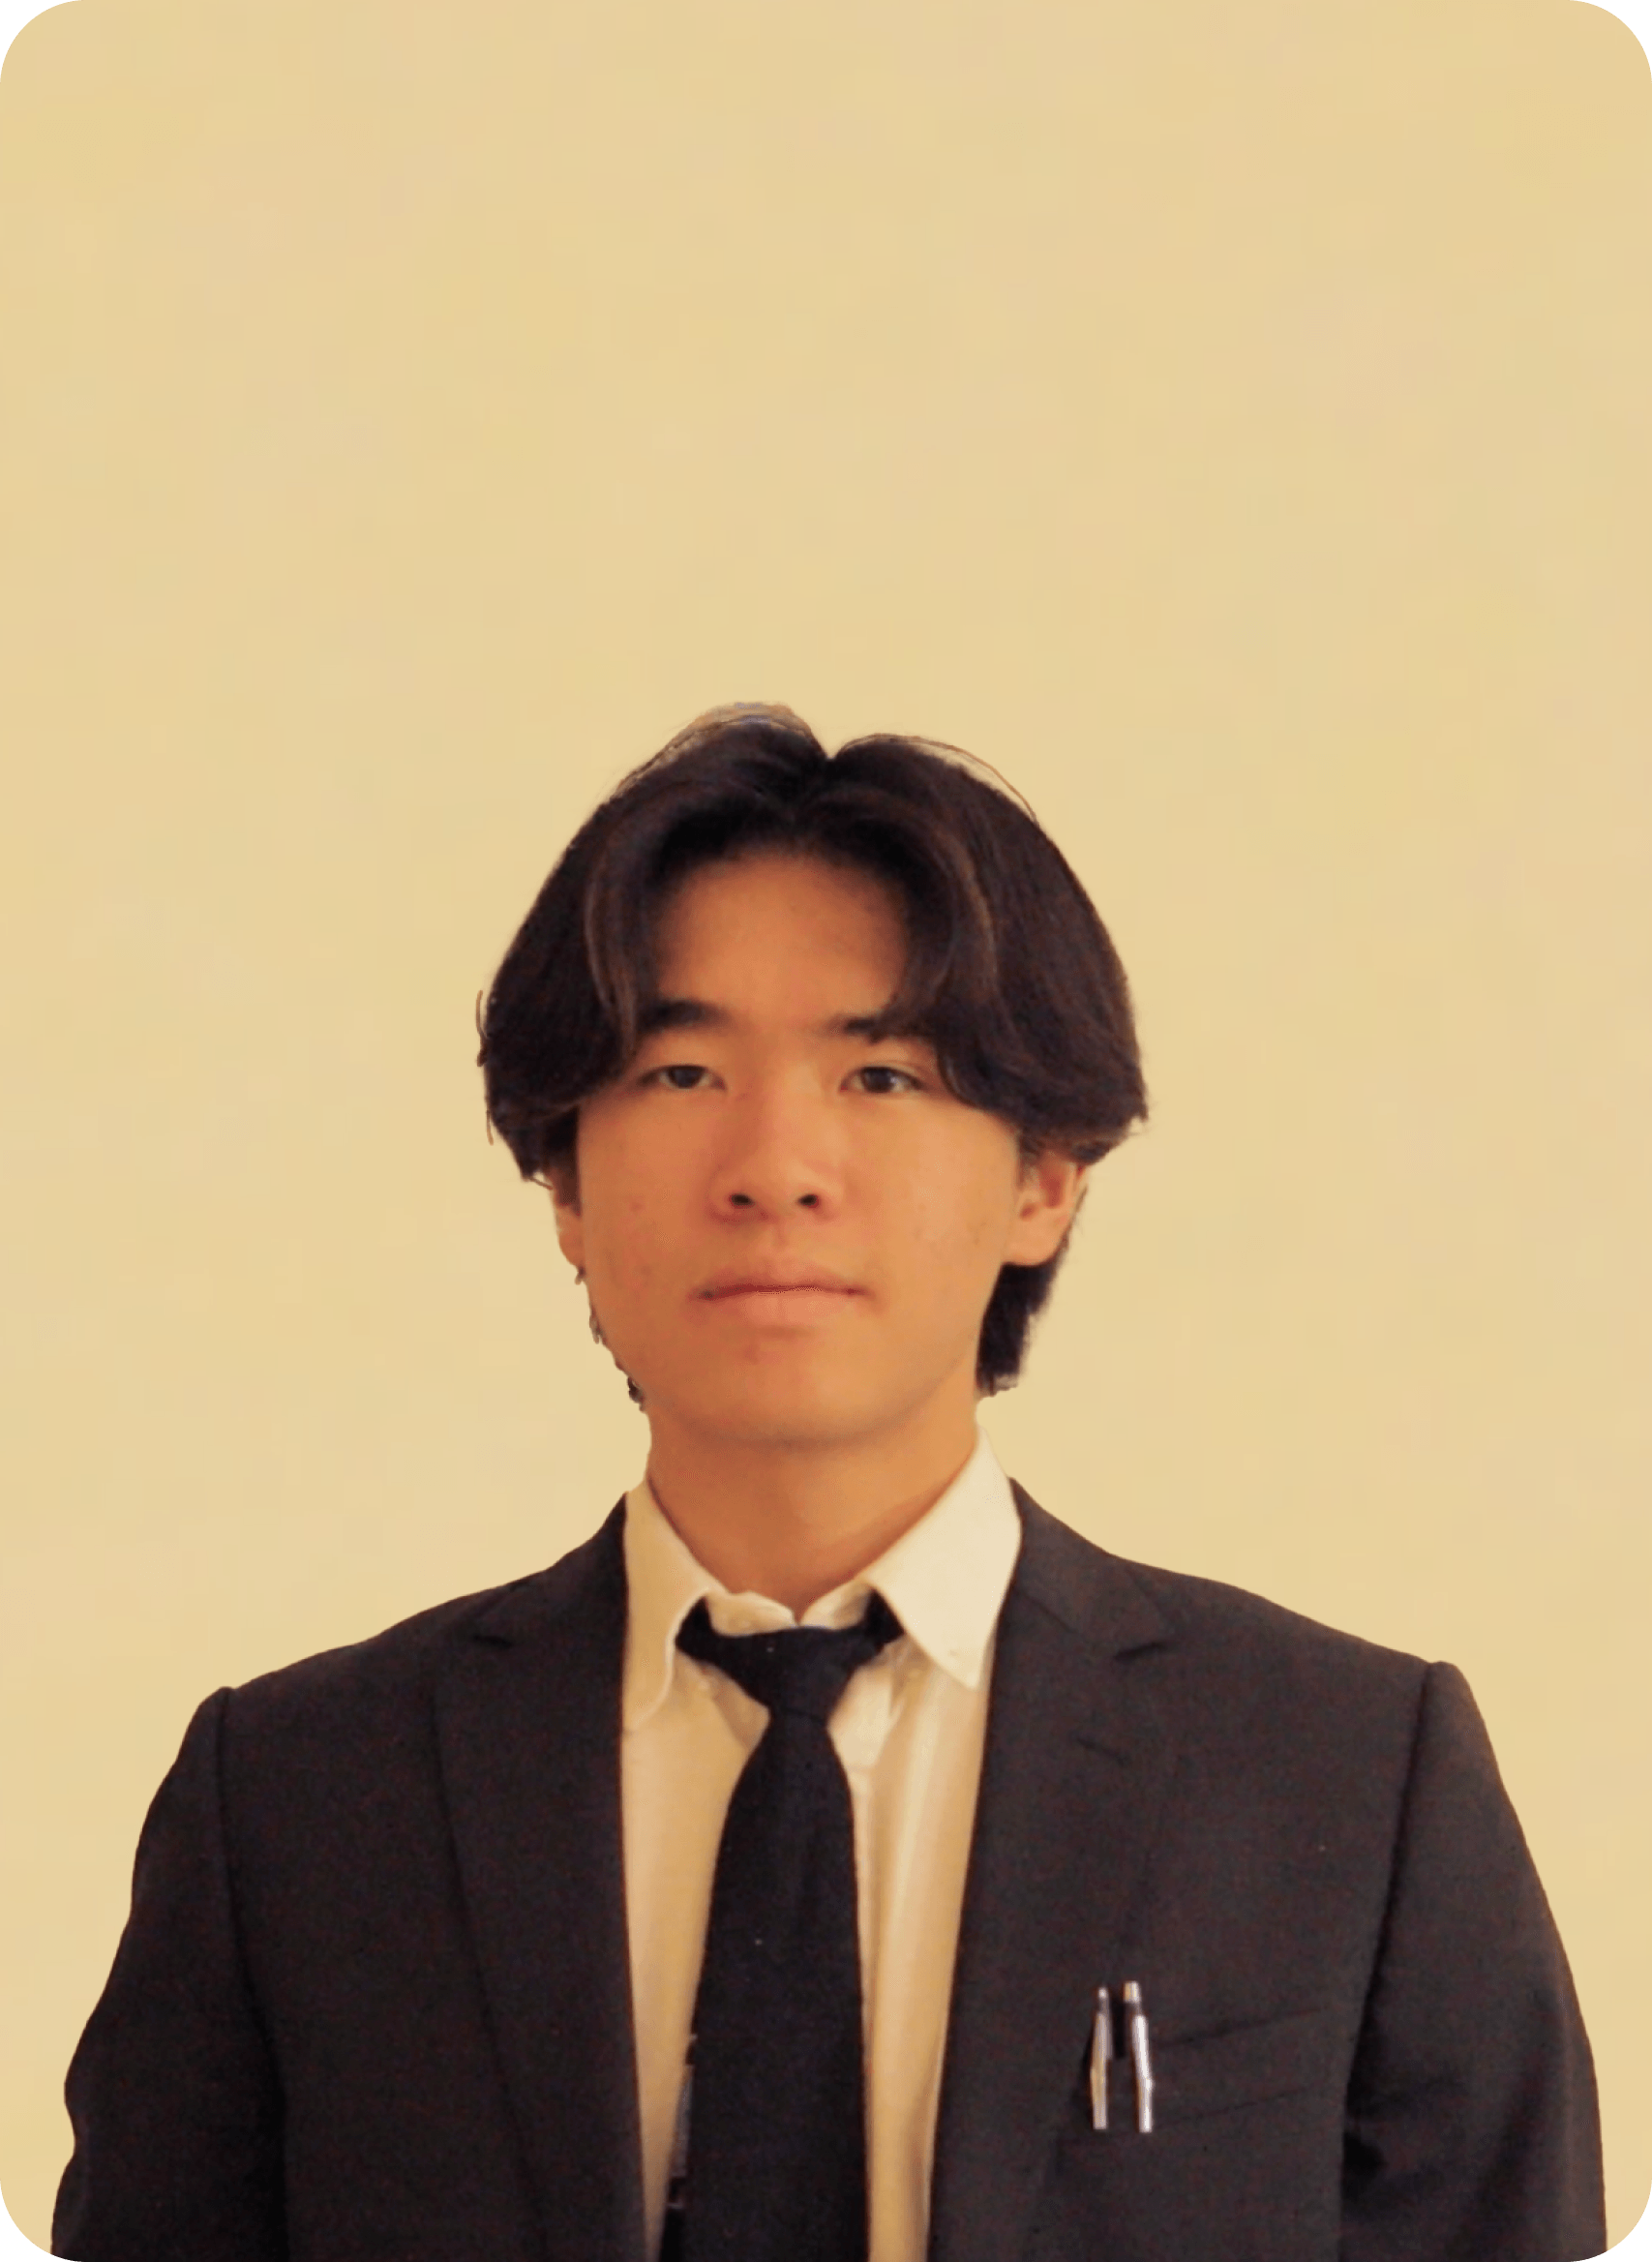 Thomas Li portrait